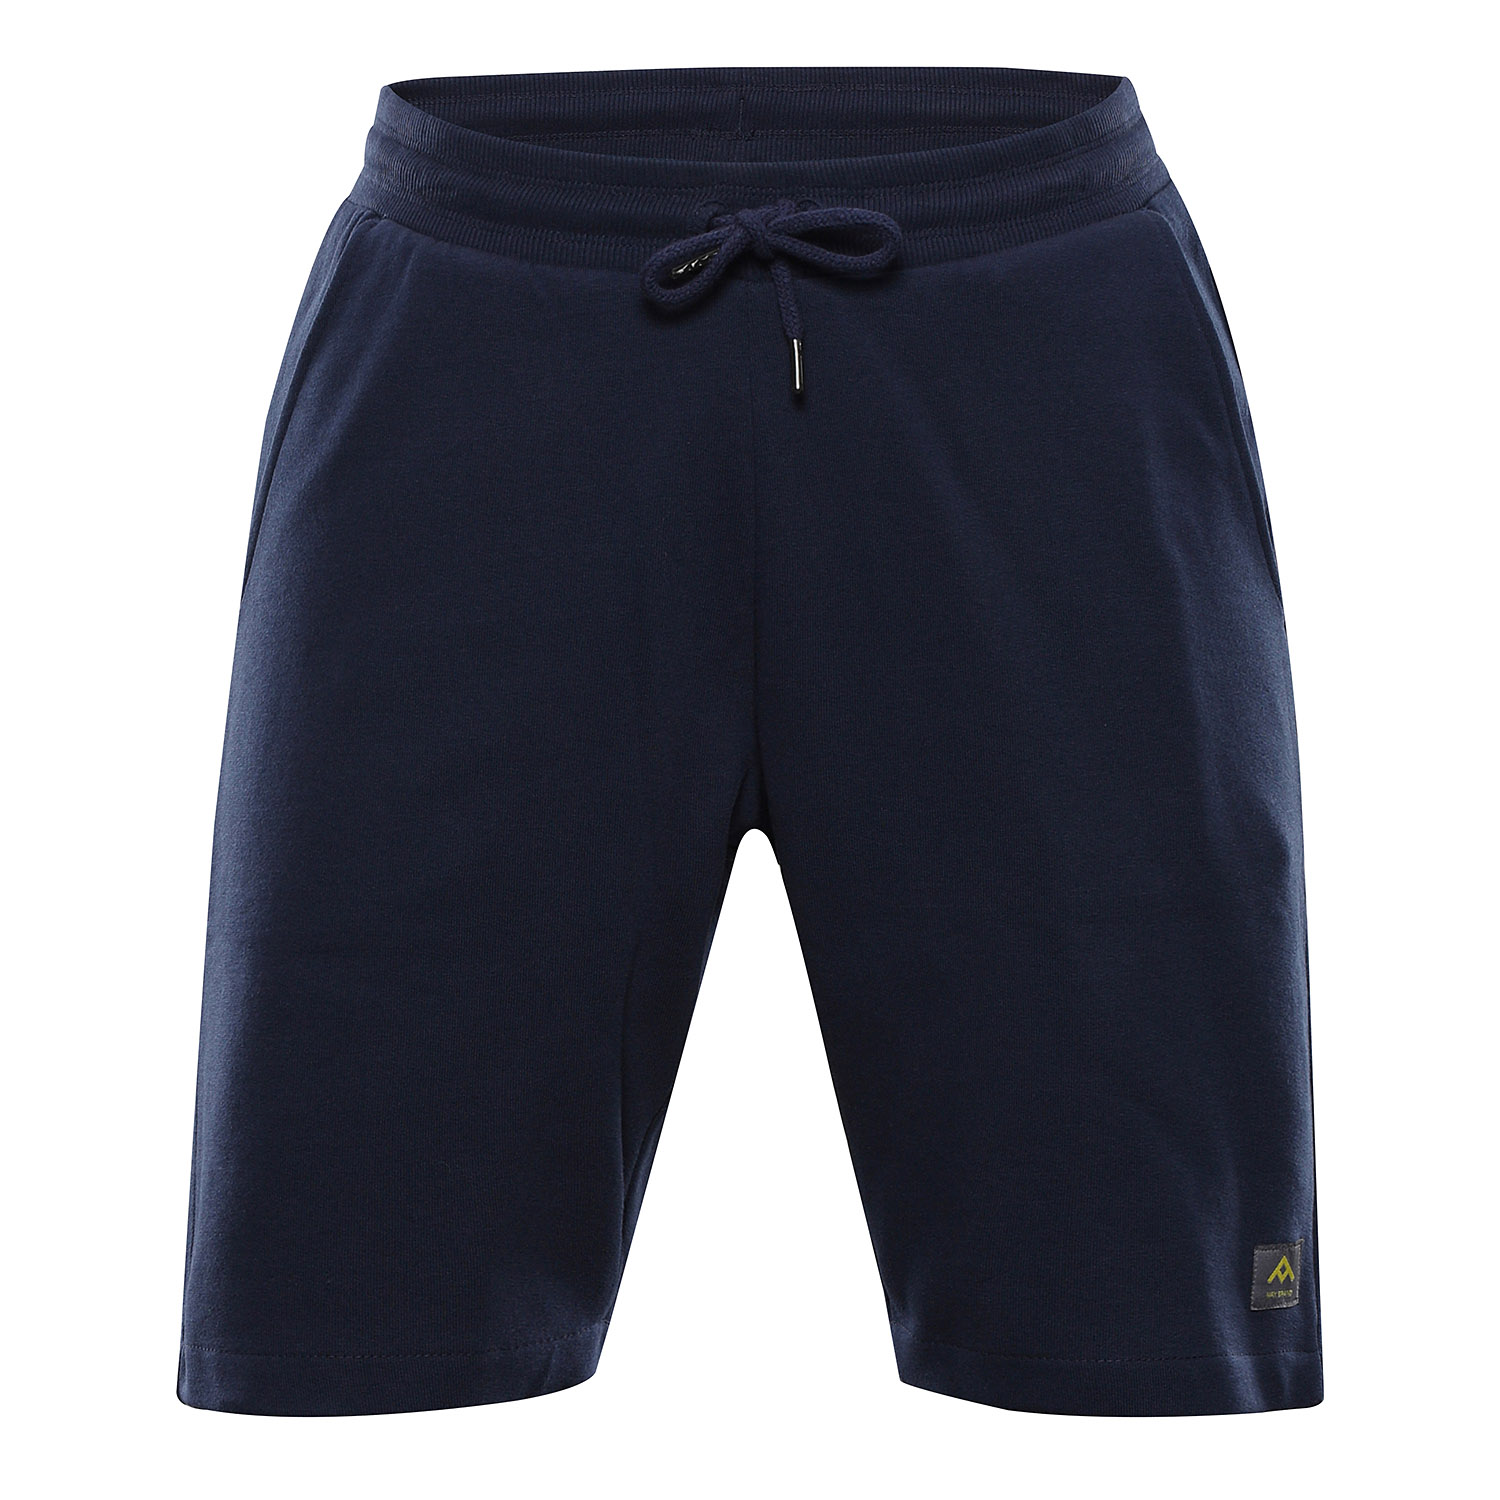 Men's nax shorts NAX HUBAQ mood indigo